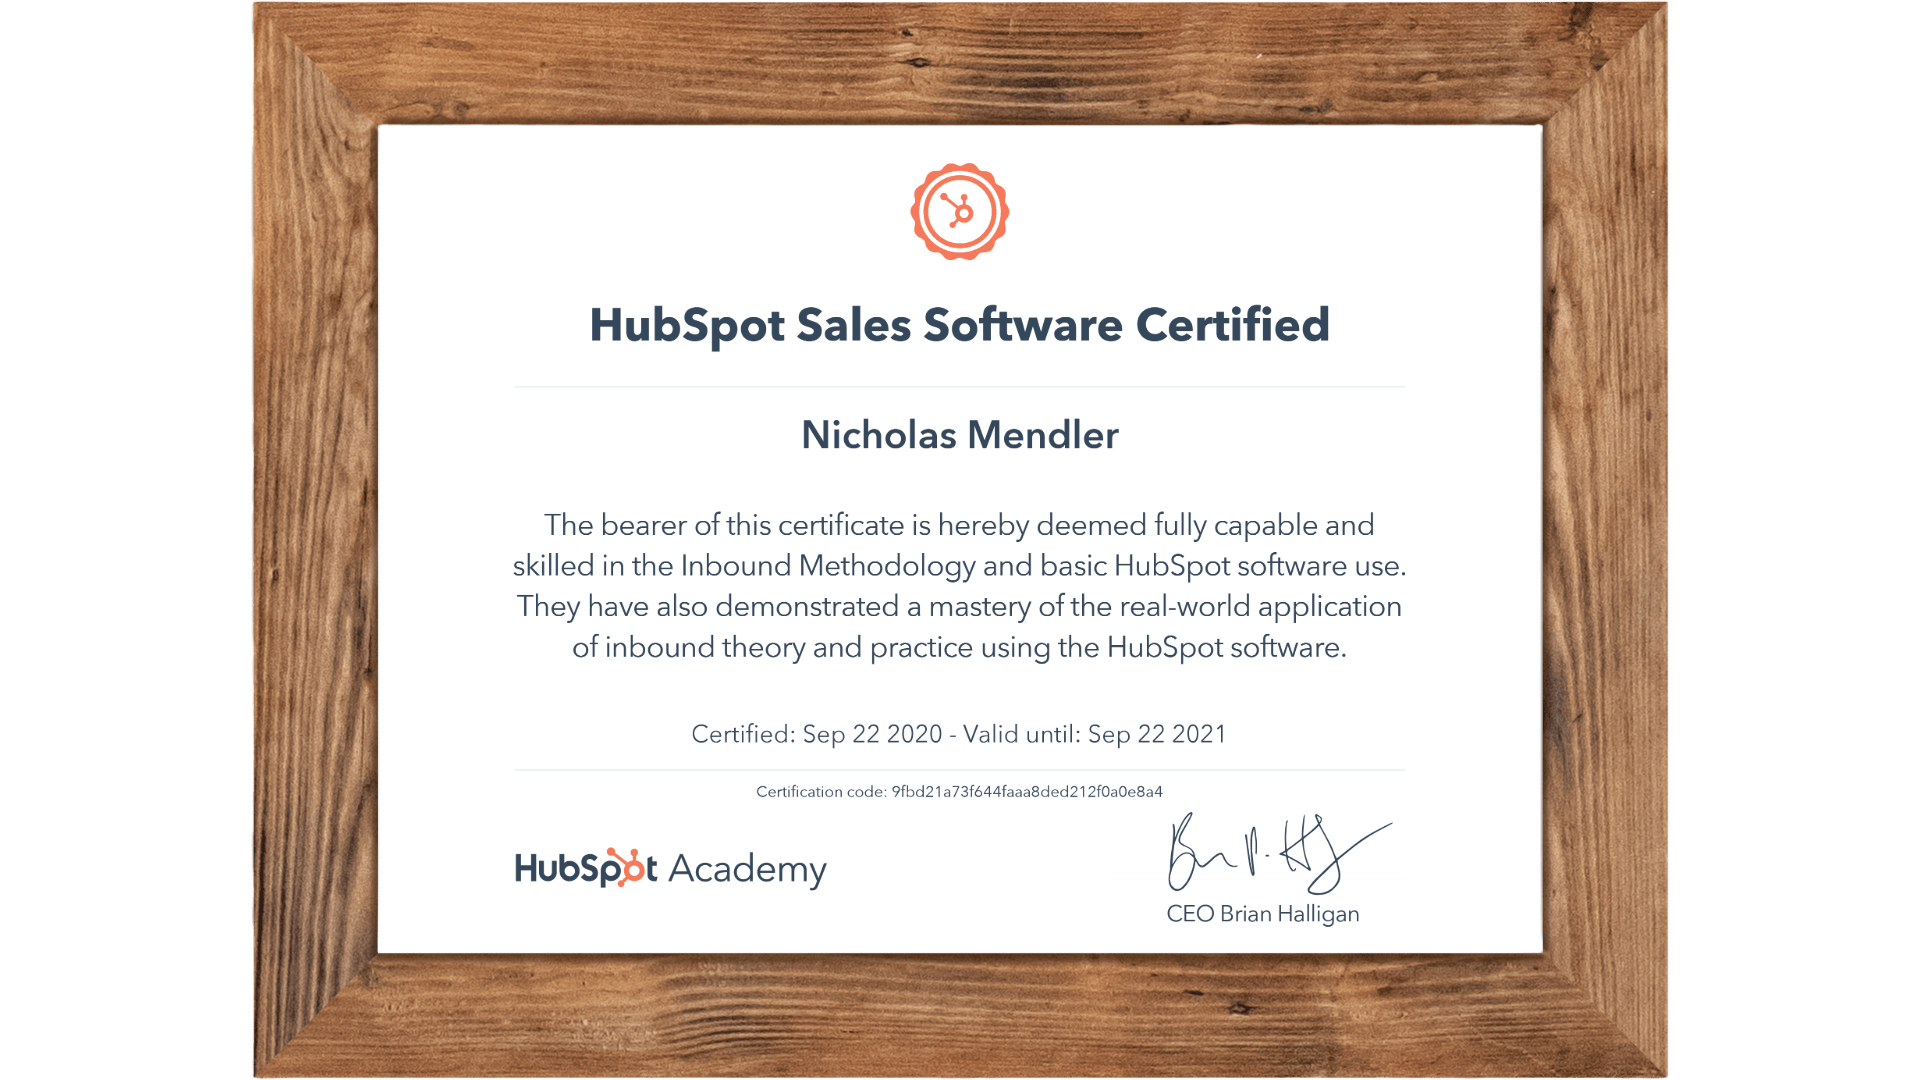 HubSpot Sales Software Certified Nick Mendler